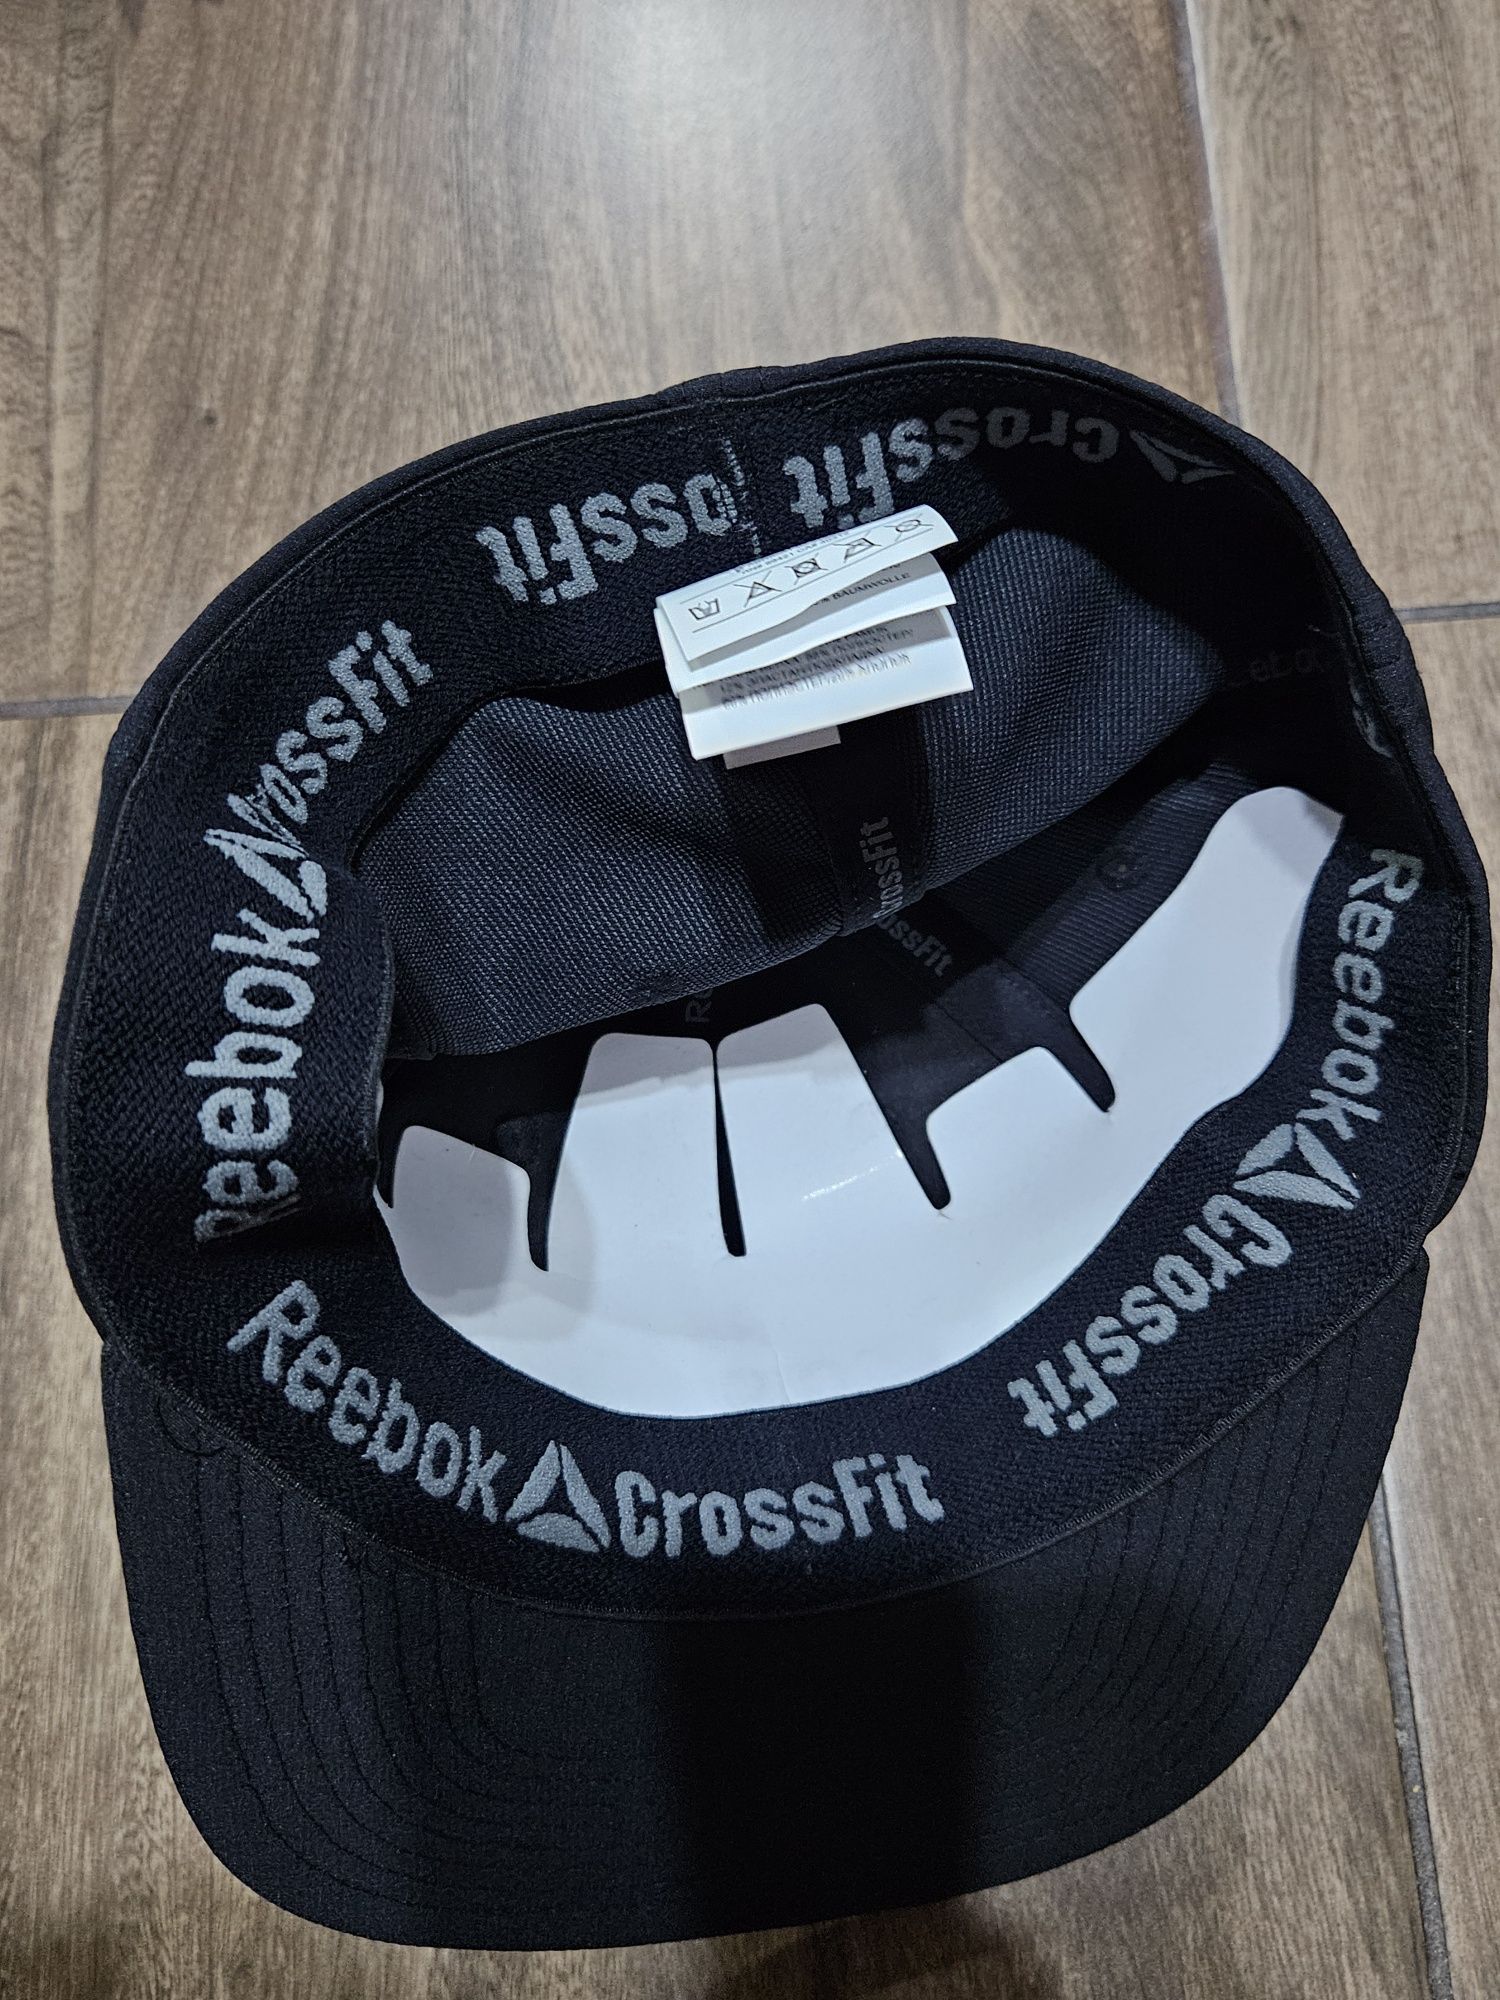 Оригинална шапка Rebook crosfit